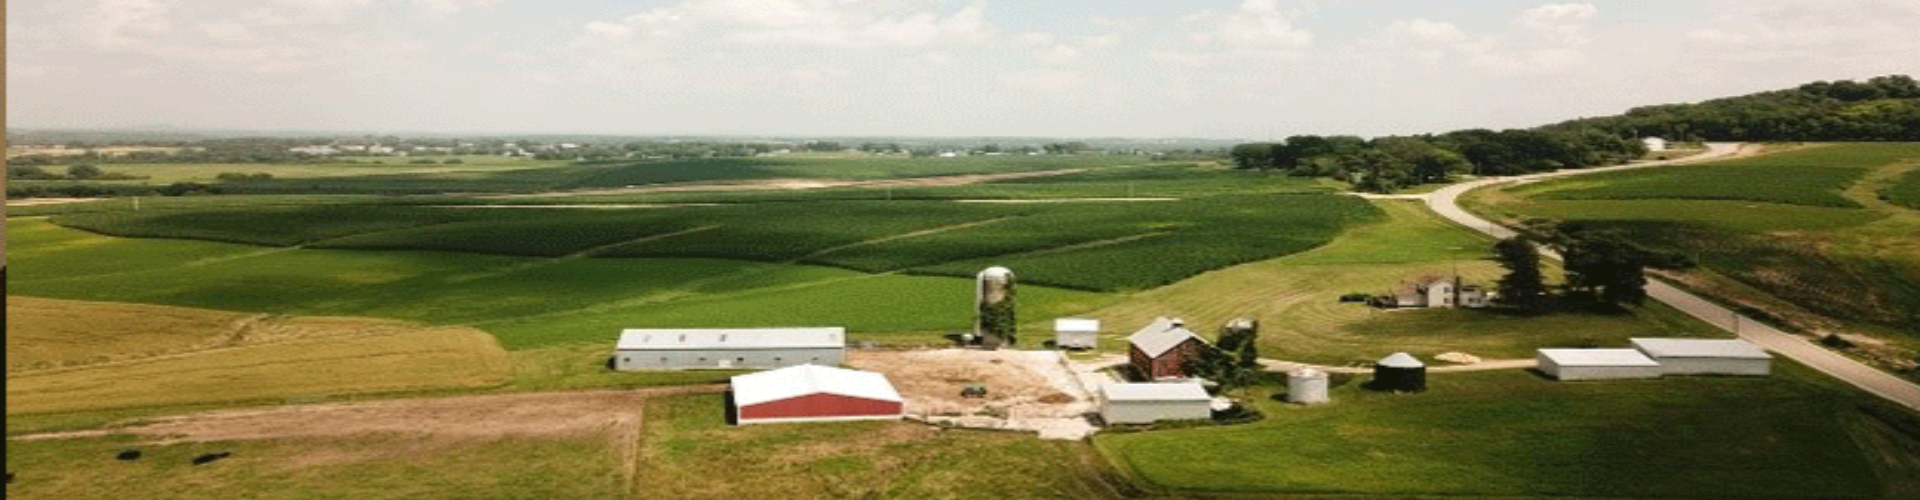 Michigan farming land